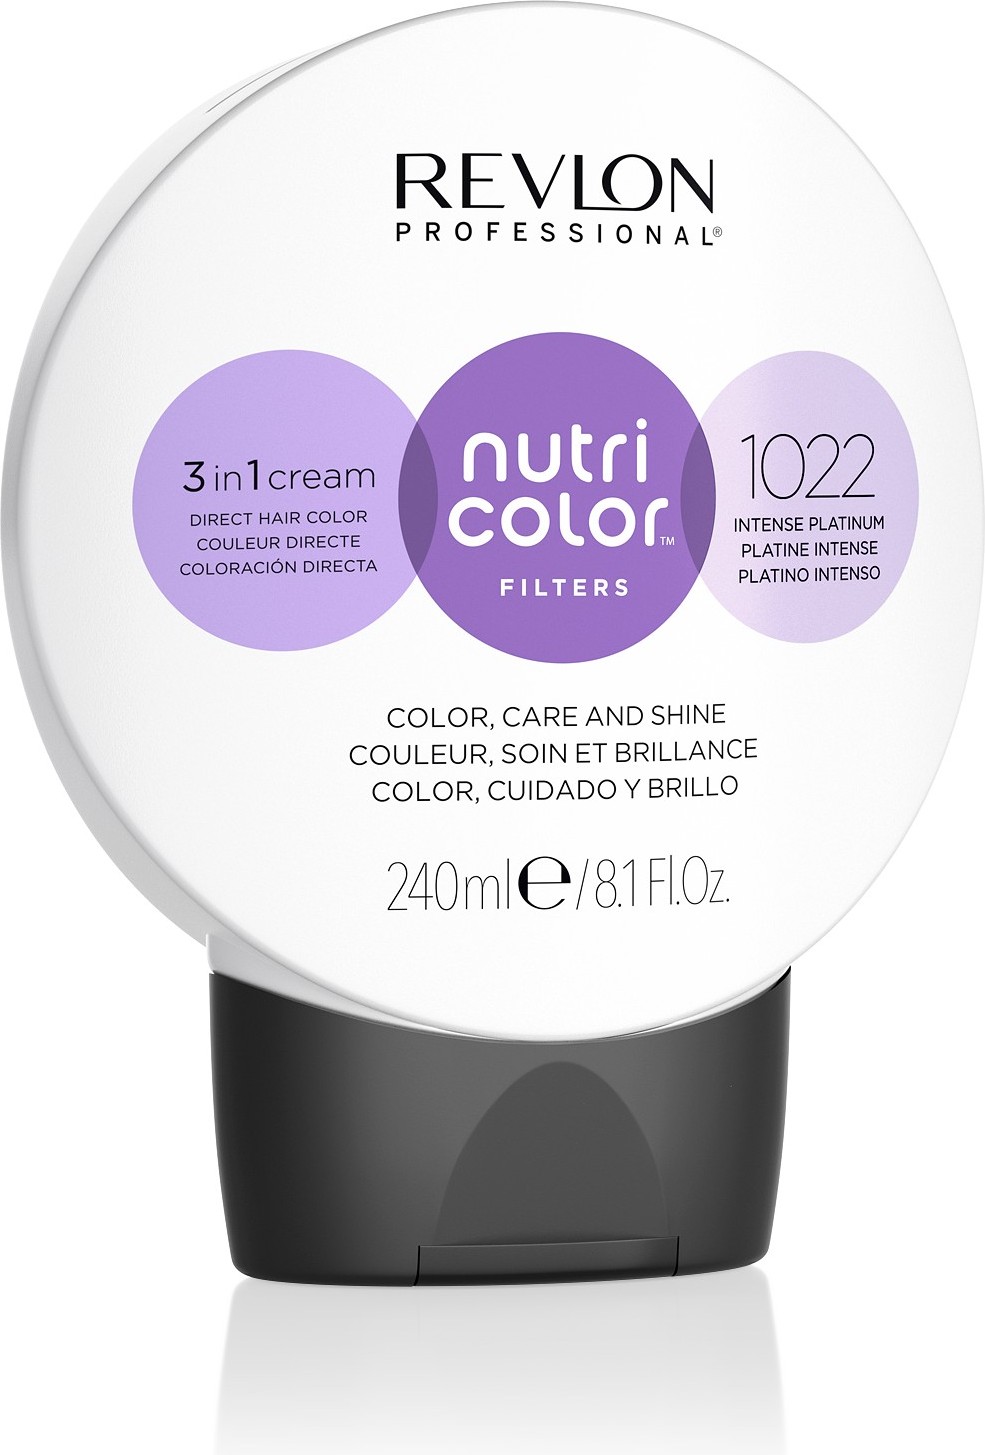  Revlon Professional Nutri Color Filters 1022 Platine Intense 240 ml 